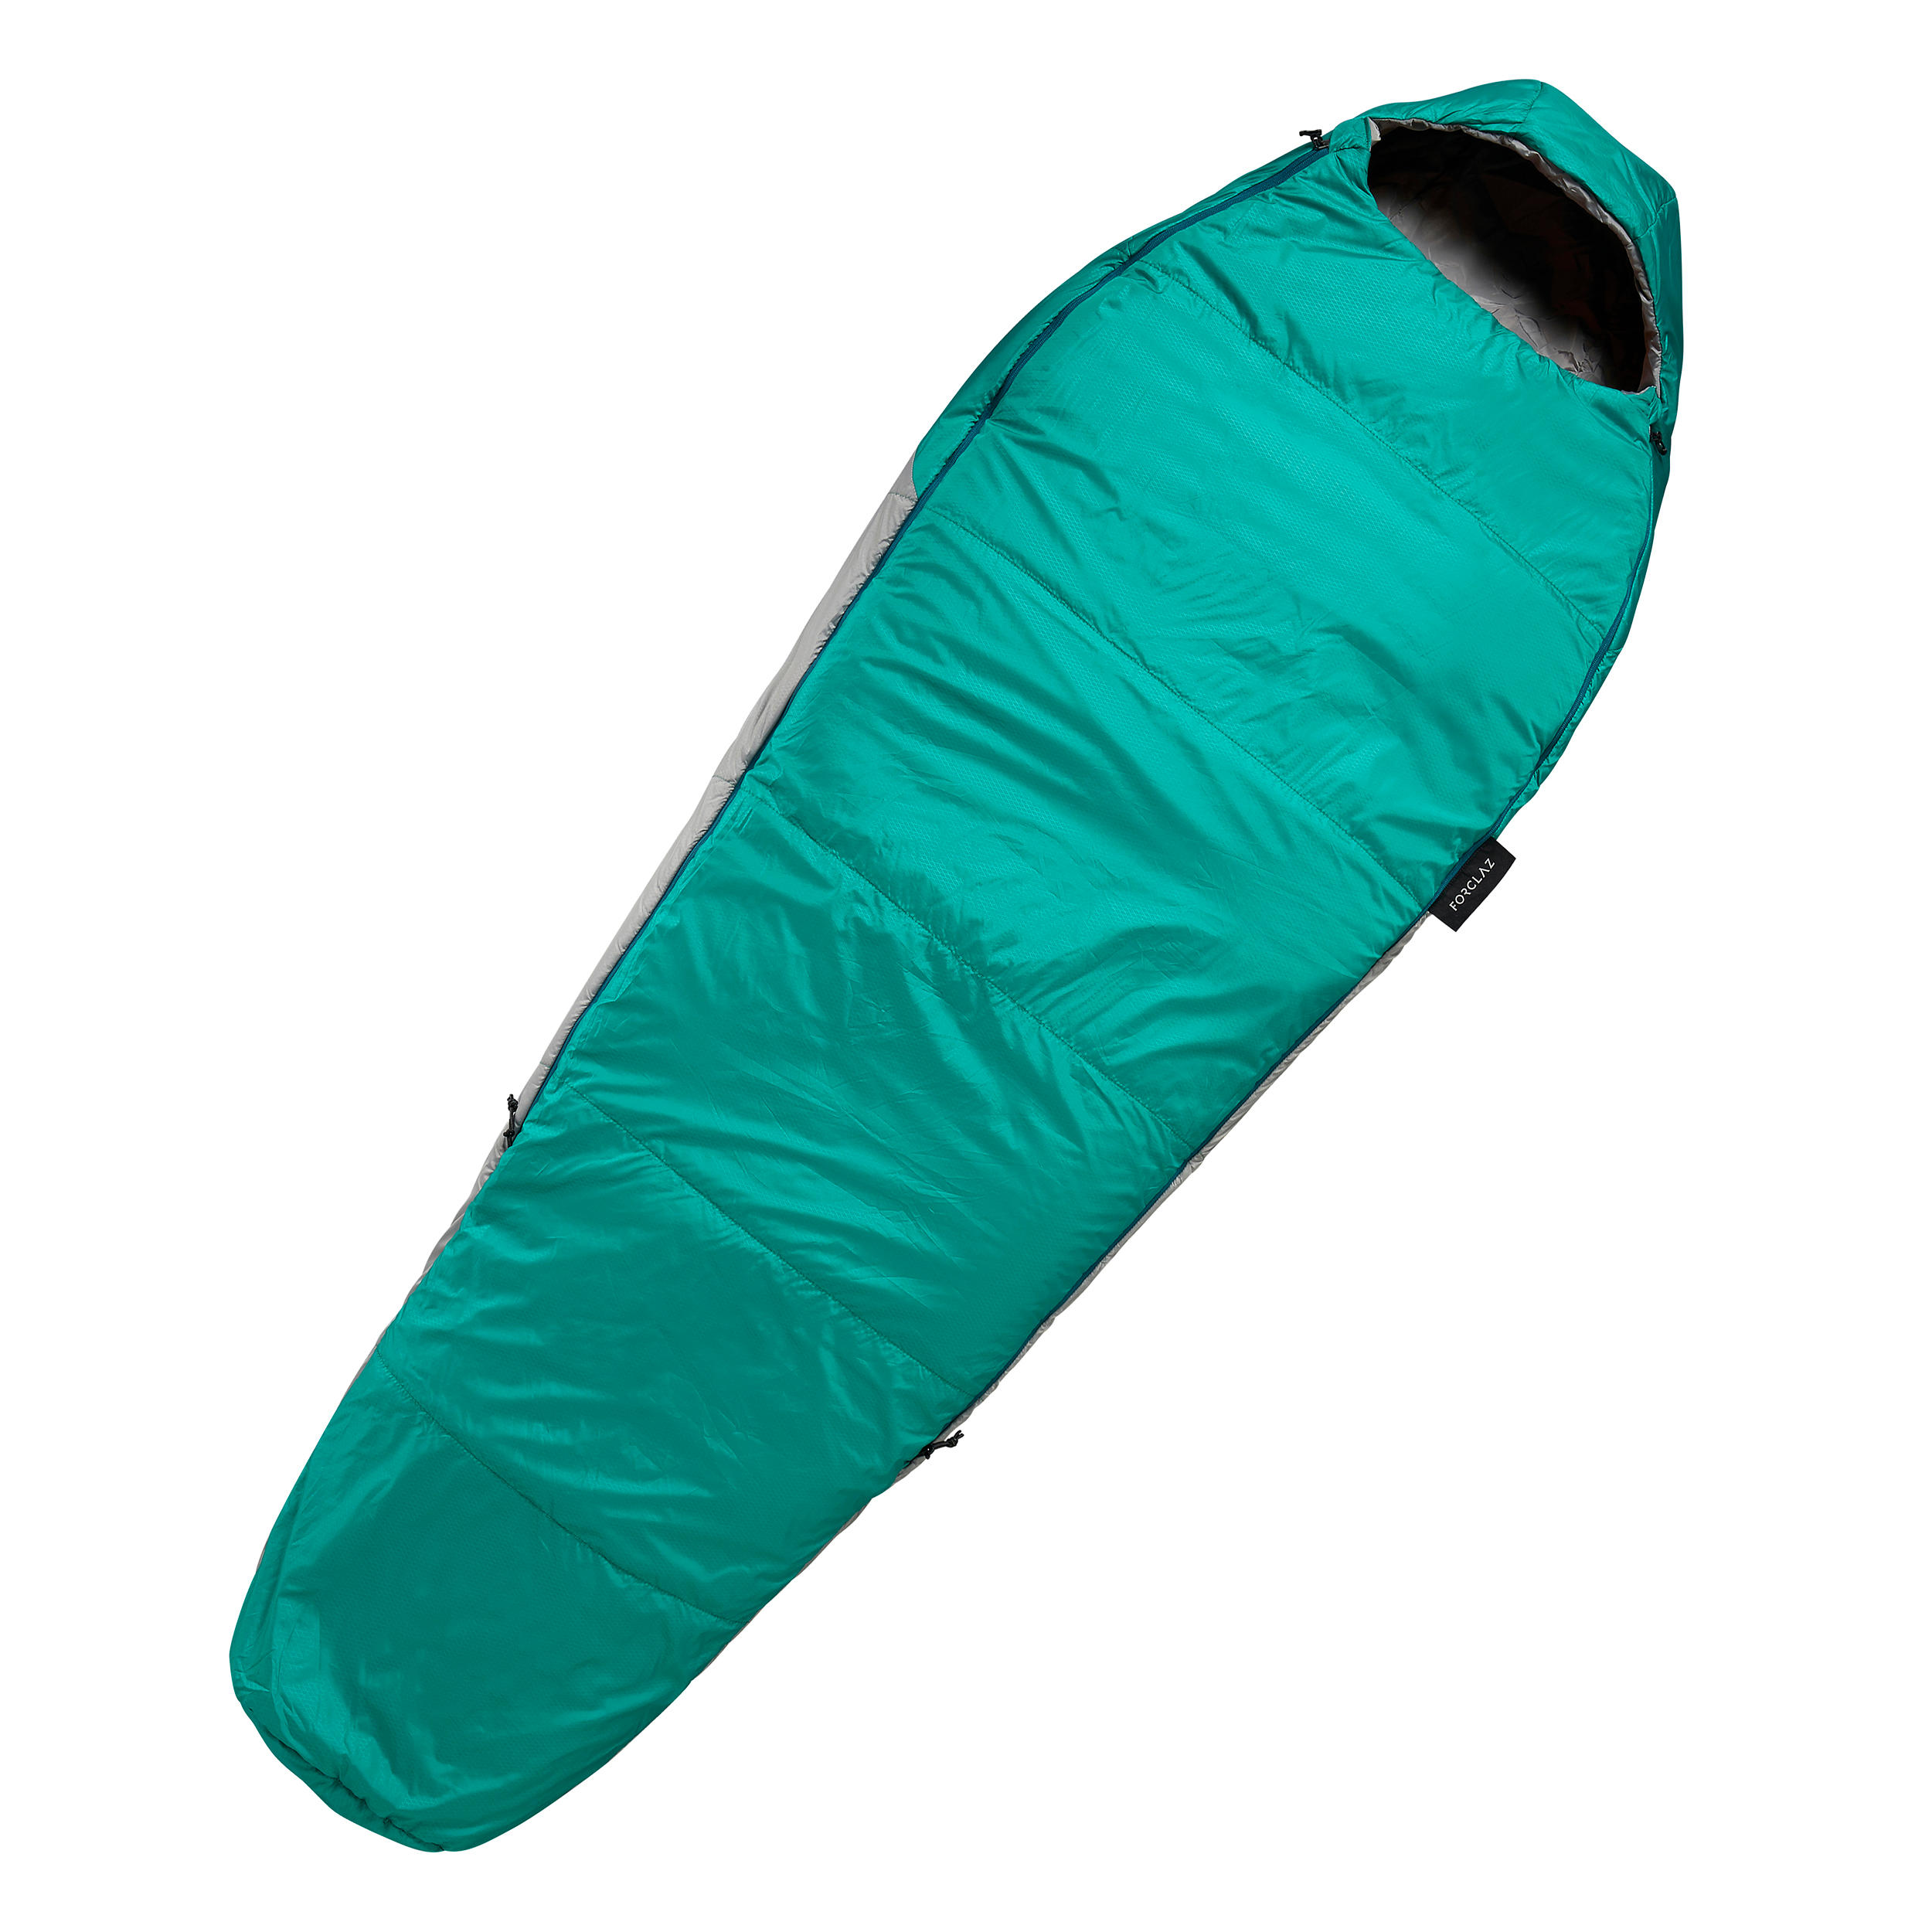 Tripole Shivalik Series -10°C Comfort Sleeping Bag